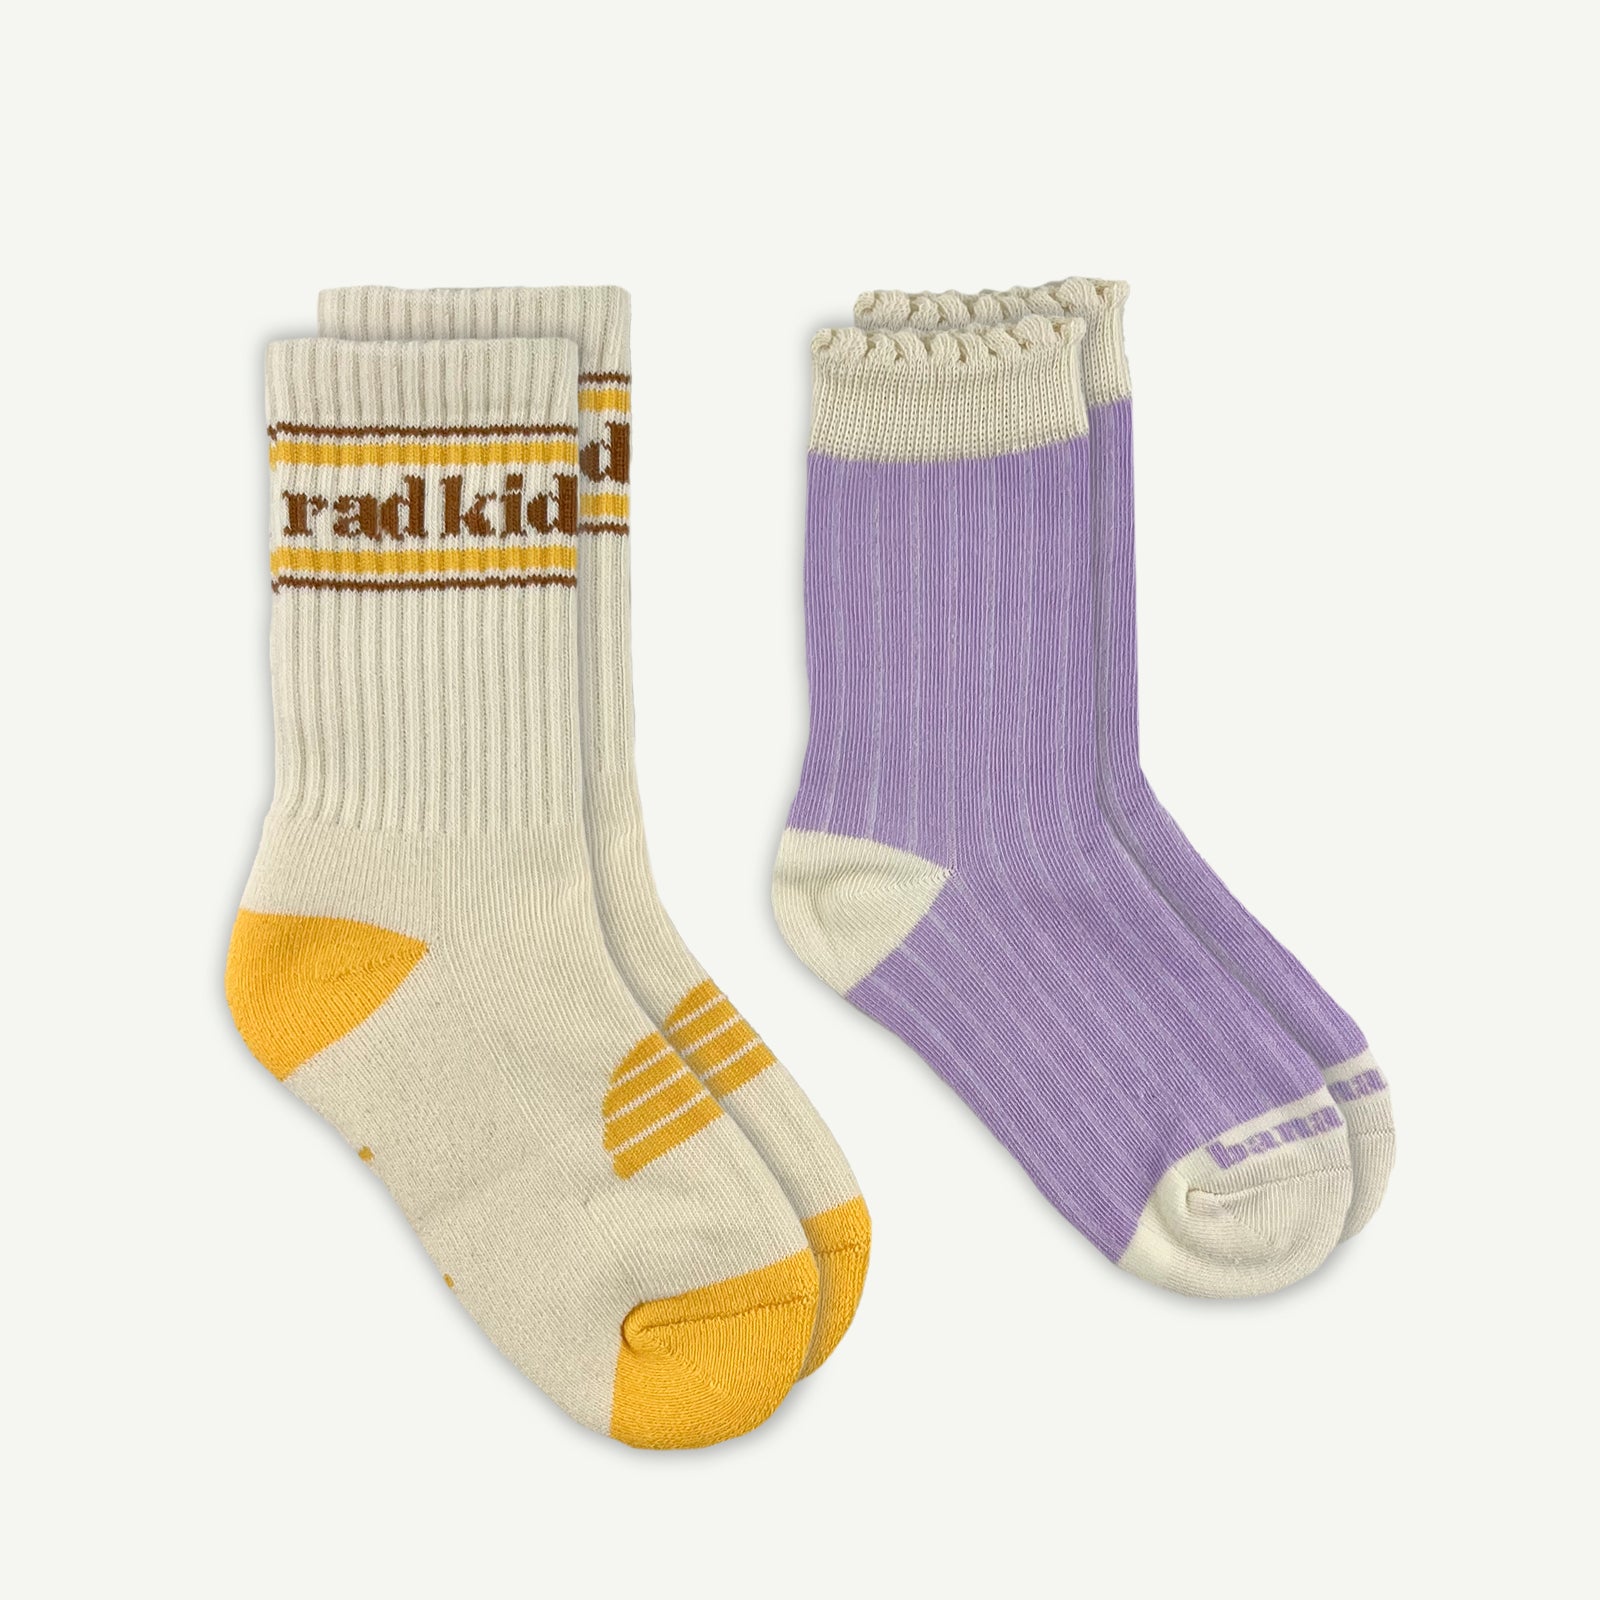 Rad Kid and Lilac Rib Organic Cotton Sock Pack